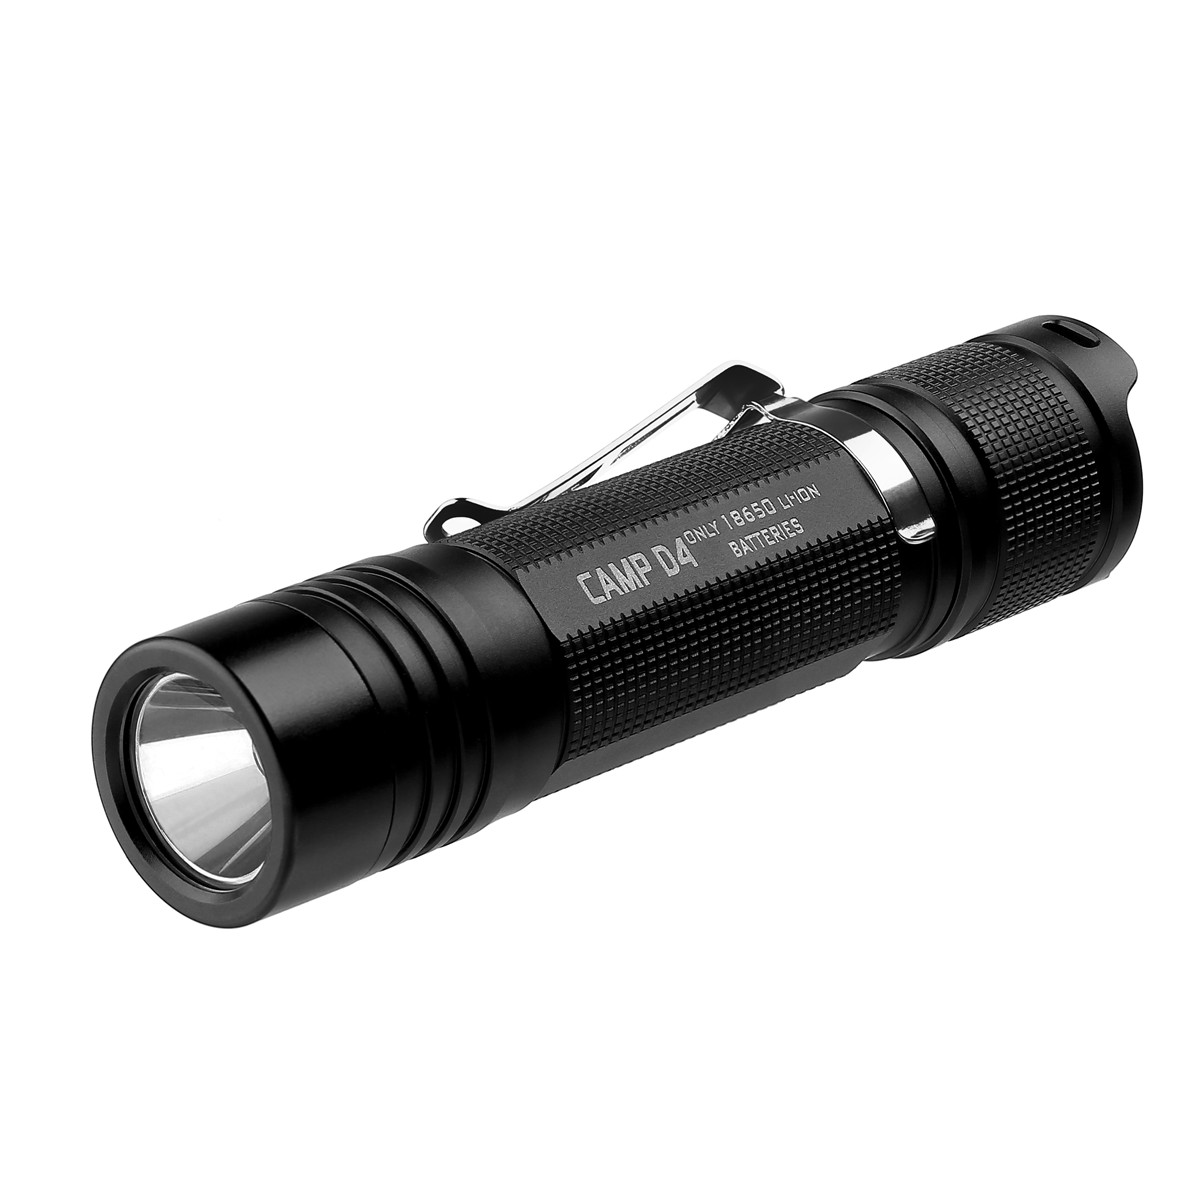 

Folomov Camp D4 XP-L 1080Lumens 4Modes Portable Tactical Outdoor LED Flashlight 18650